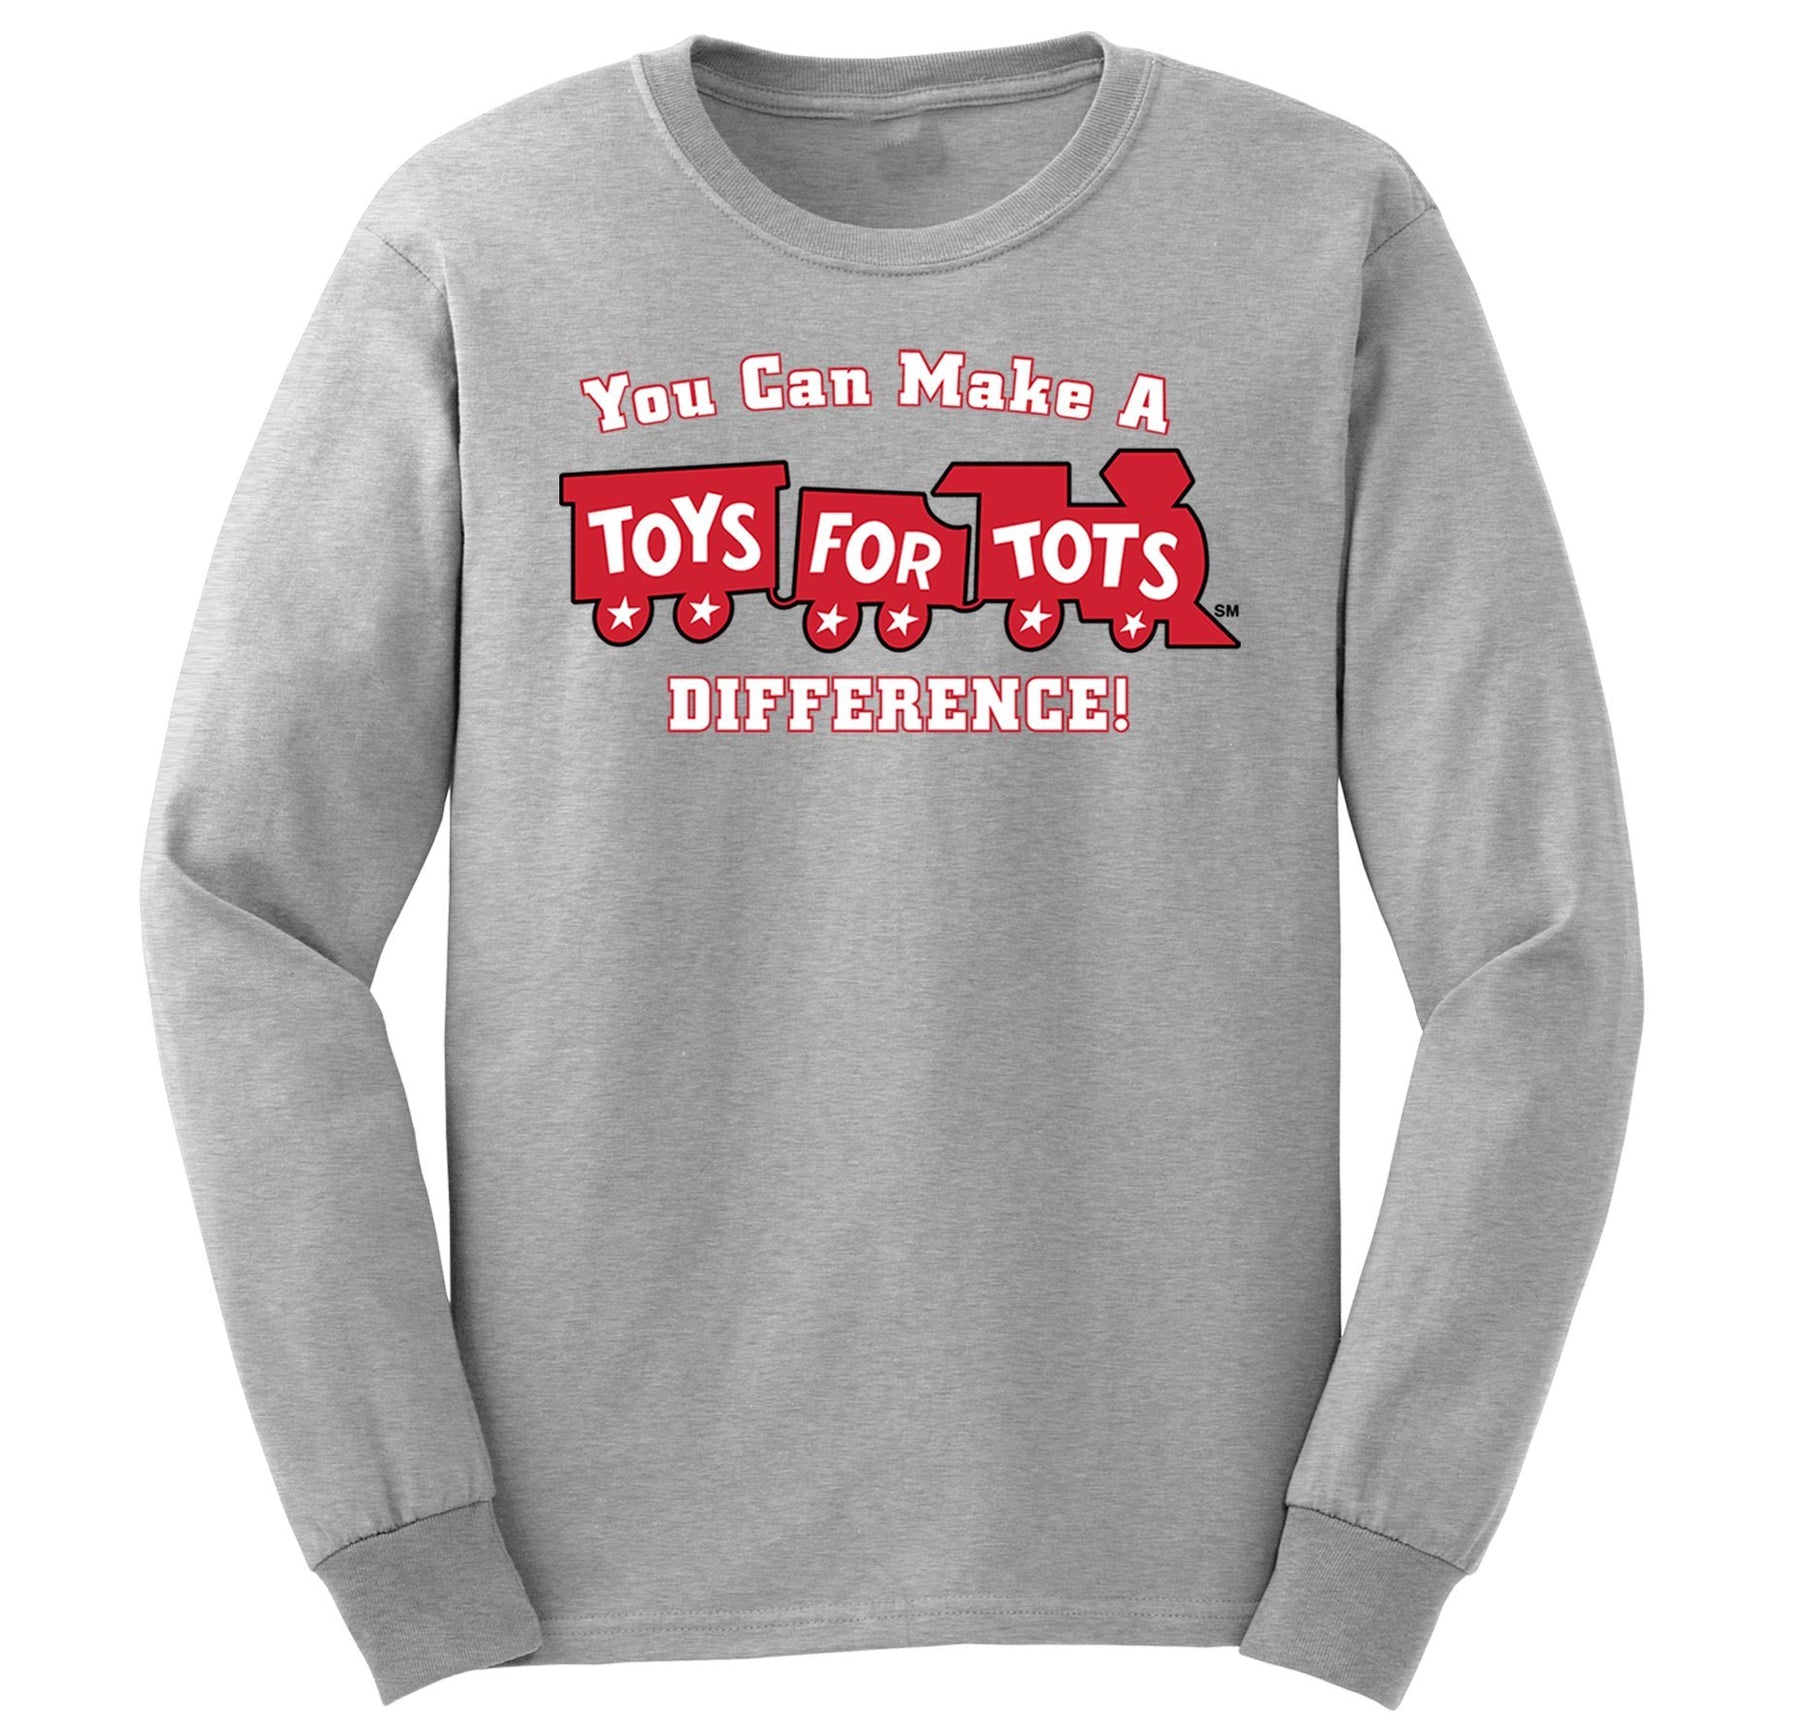 Make a Difference TFT Train Kids Long Sleeve TFT Shirt marinecorpsdirecttft S SPORT GRAY 